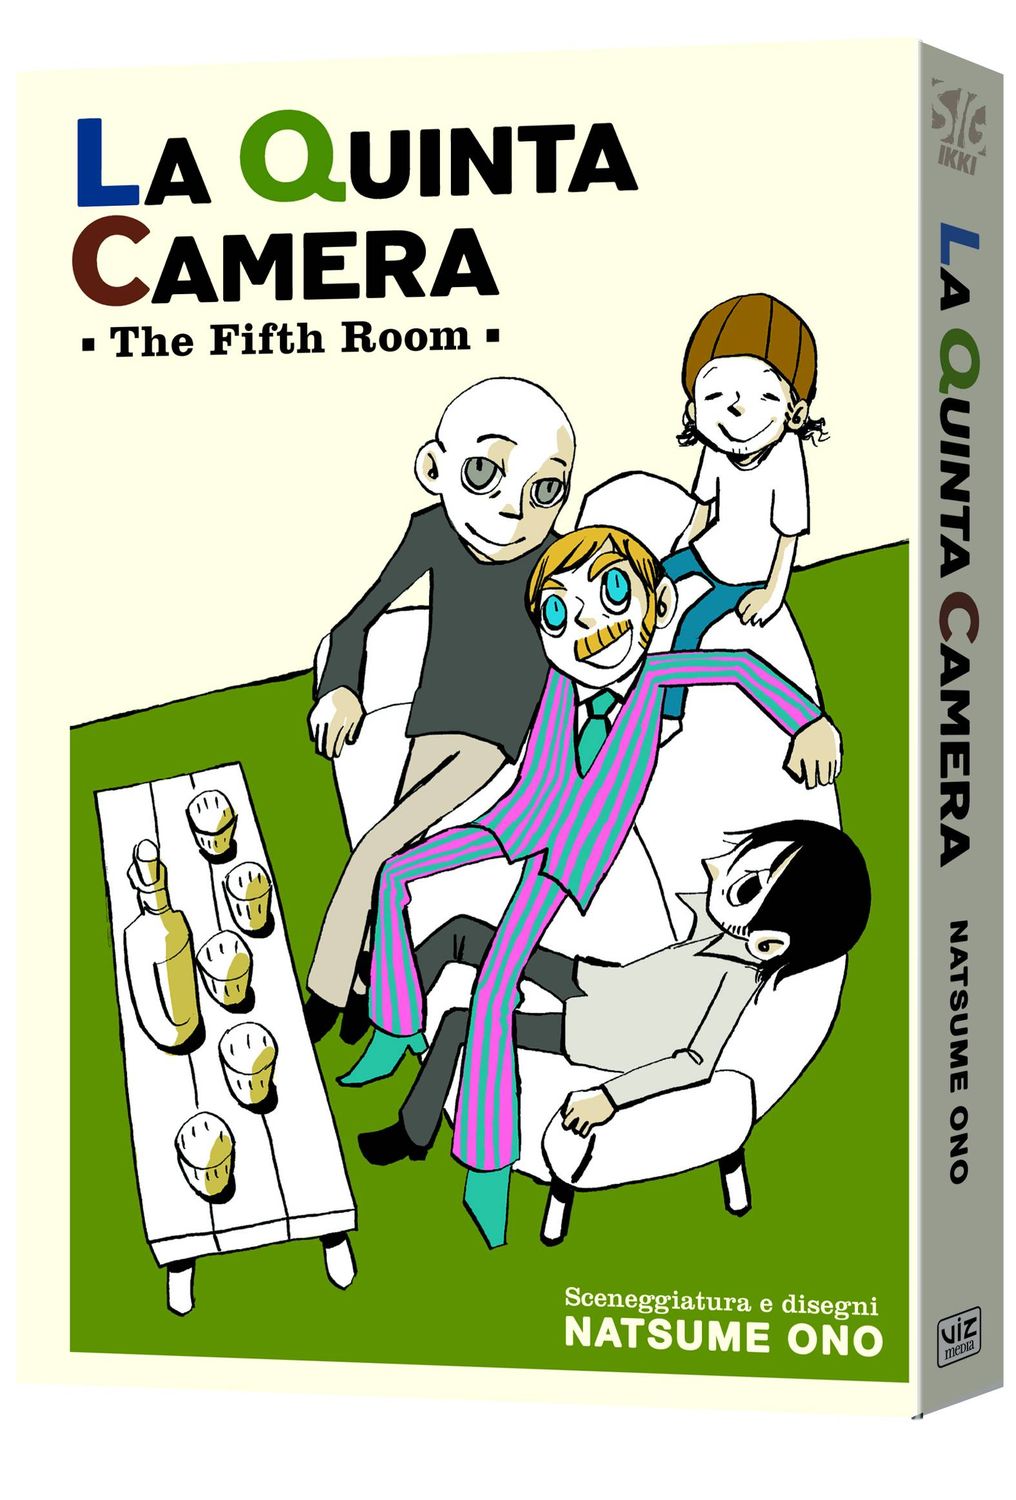 La Quinta Camera Volume 1 By Natsume Ono Published By Viz Media Llc Forbiddenplanet Com Uk And Worldwide Cult Entertainment Megastore